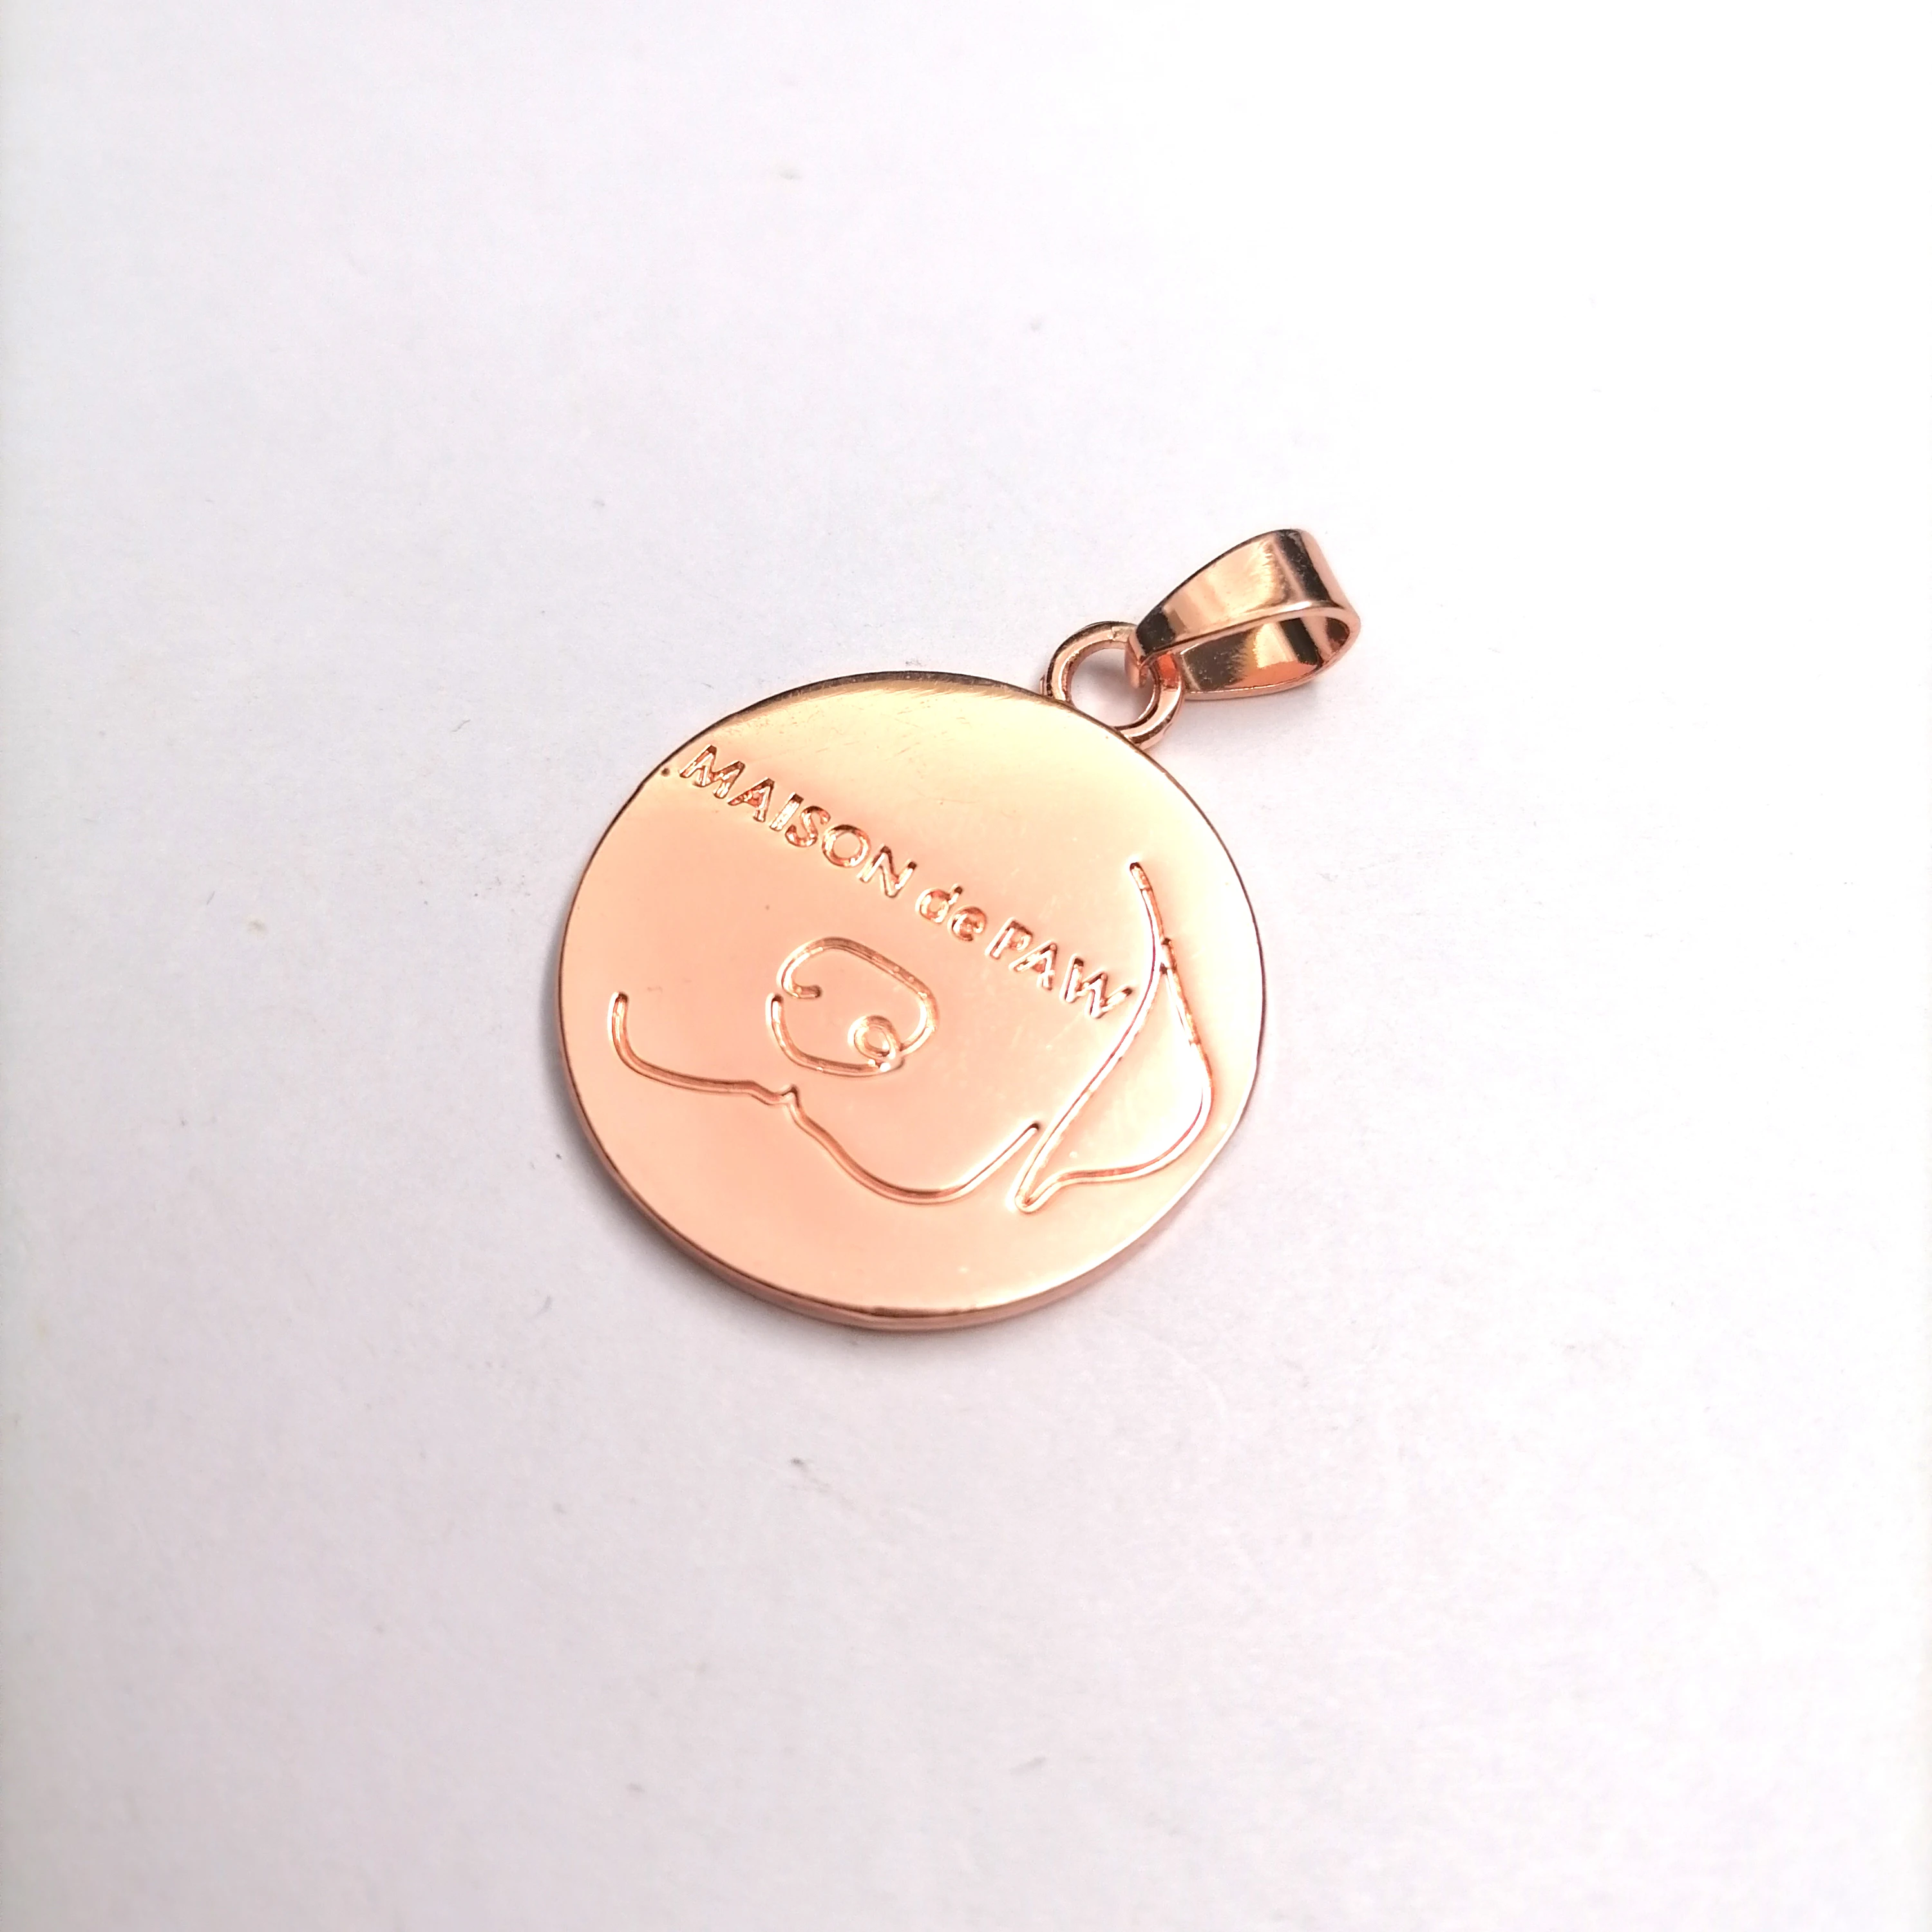 Custom engraved metal plates logo label small round logo pendant jewelry tags